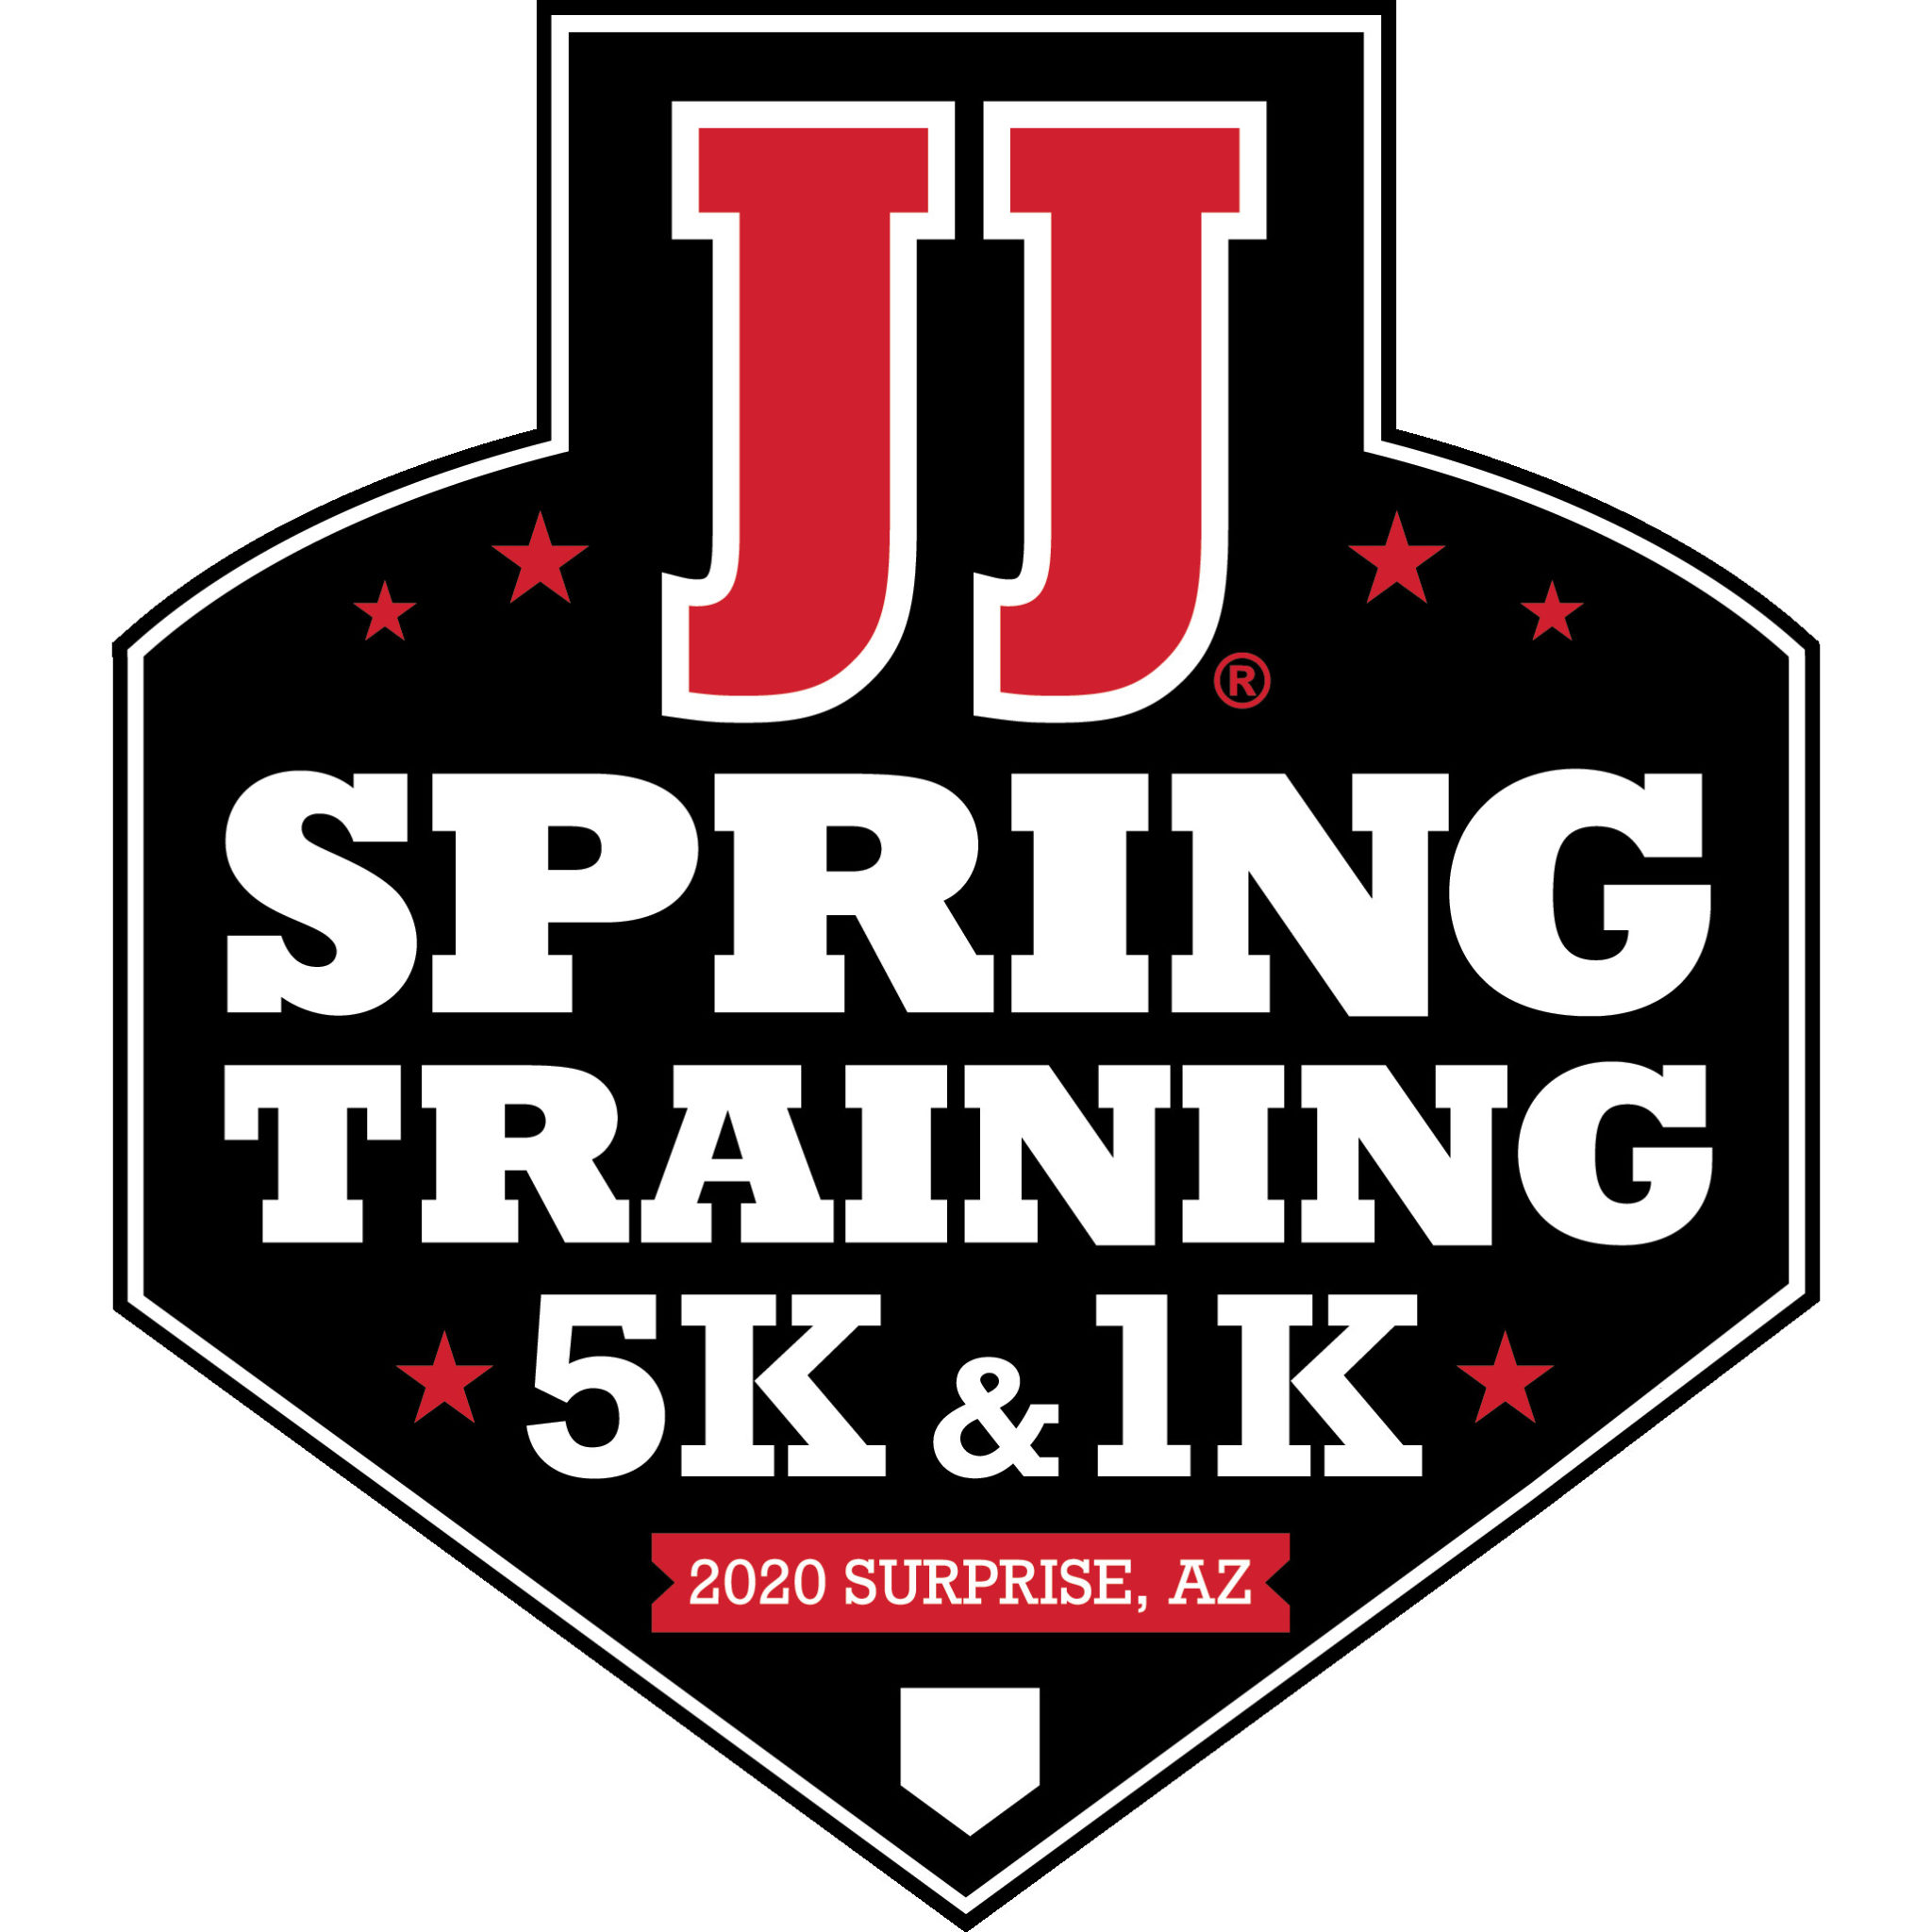 Surprise Spring Training 5K logo on RaceRaves